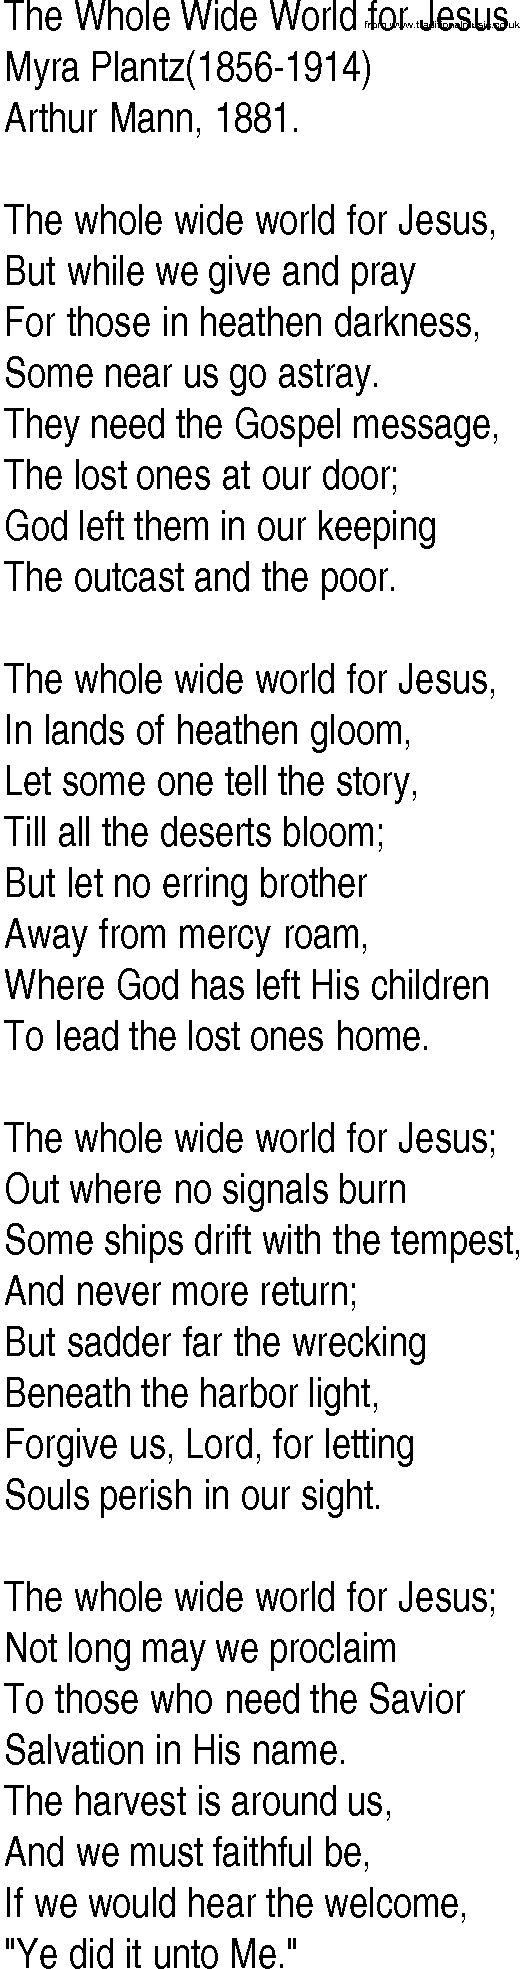 Hymn and Gospel Song: The Whole Wide World for Jesus by Myra Plantz lyrics